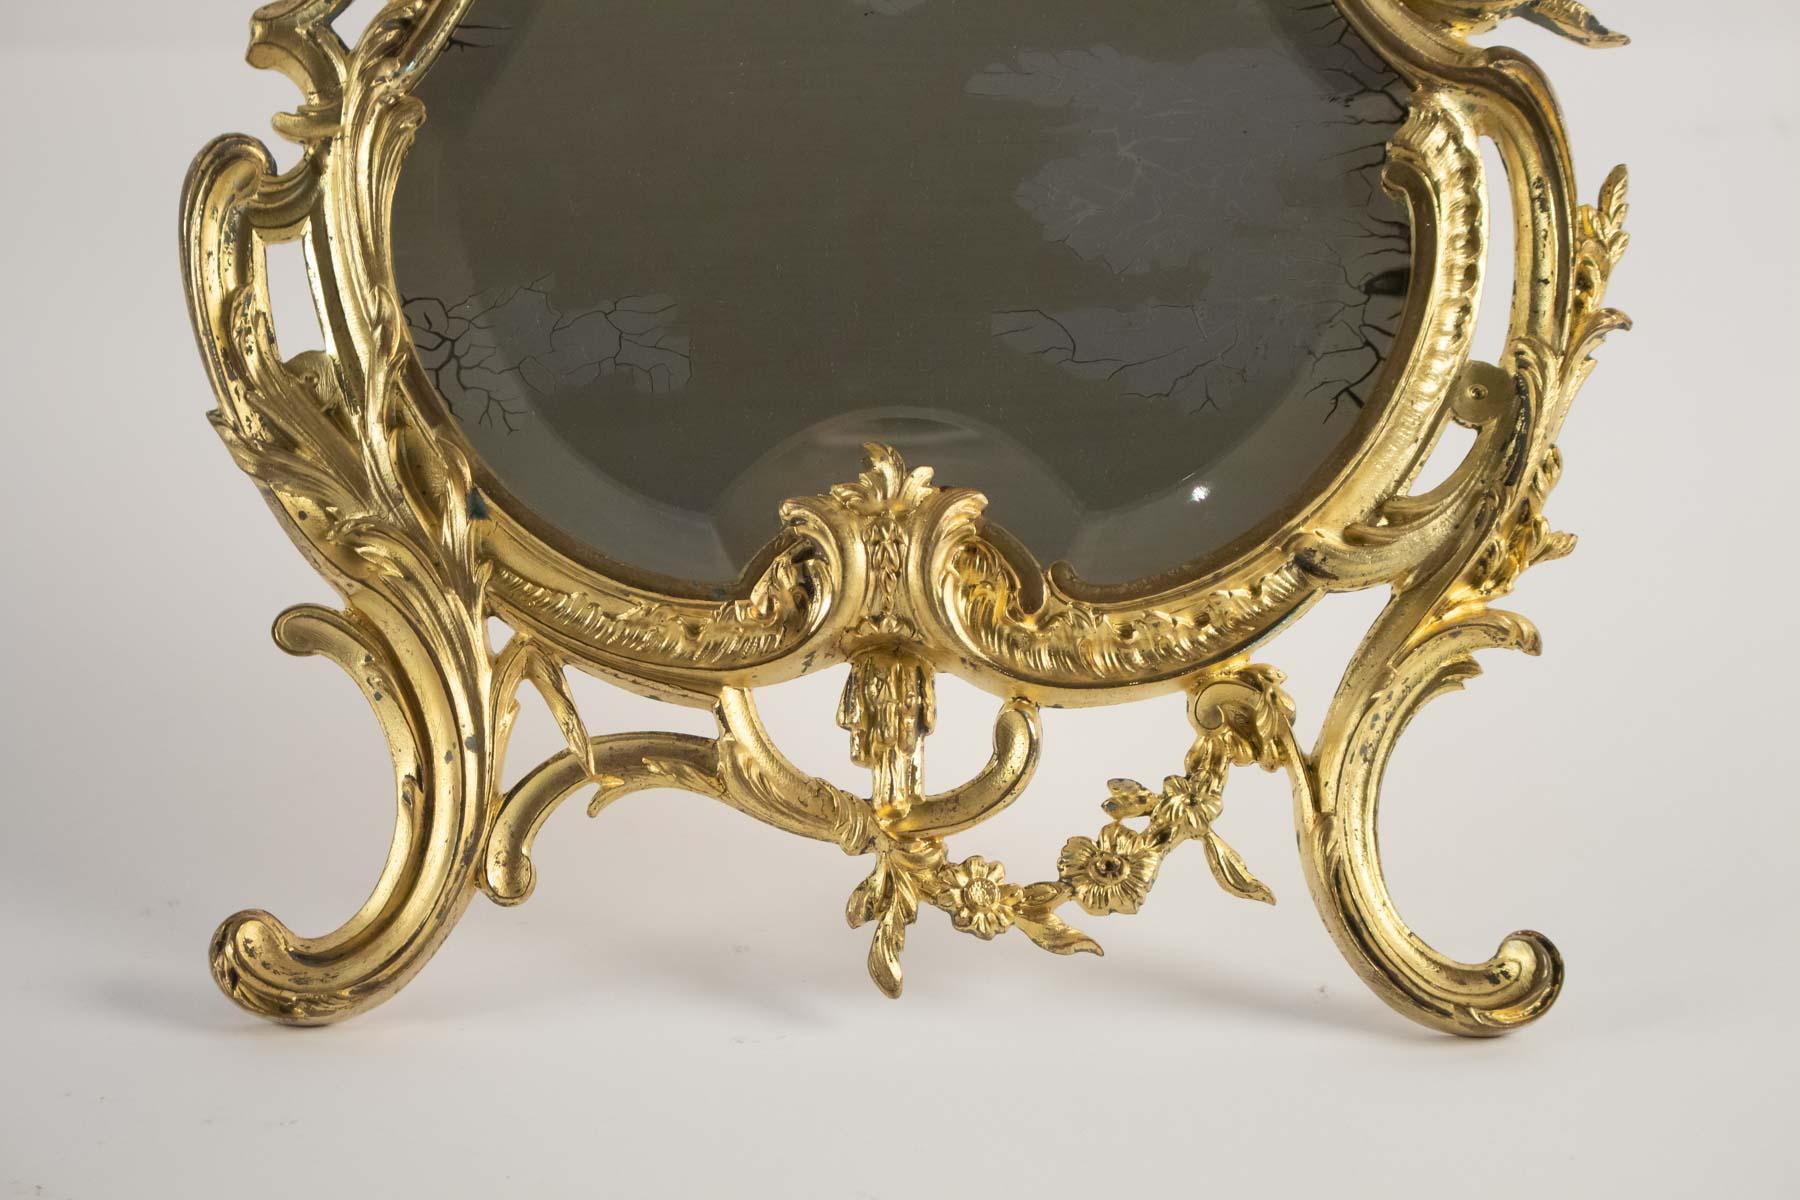 Table mirror gilt bronze original, Napoleon III, Style Louis XV, 19th century. 
Dimensions: H 41cm, W 27cm, W 2cm.